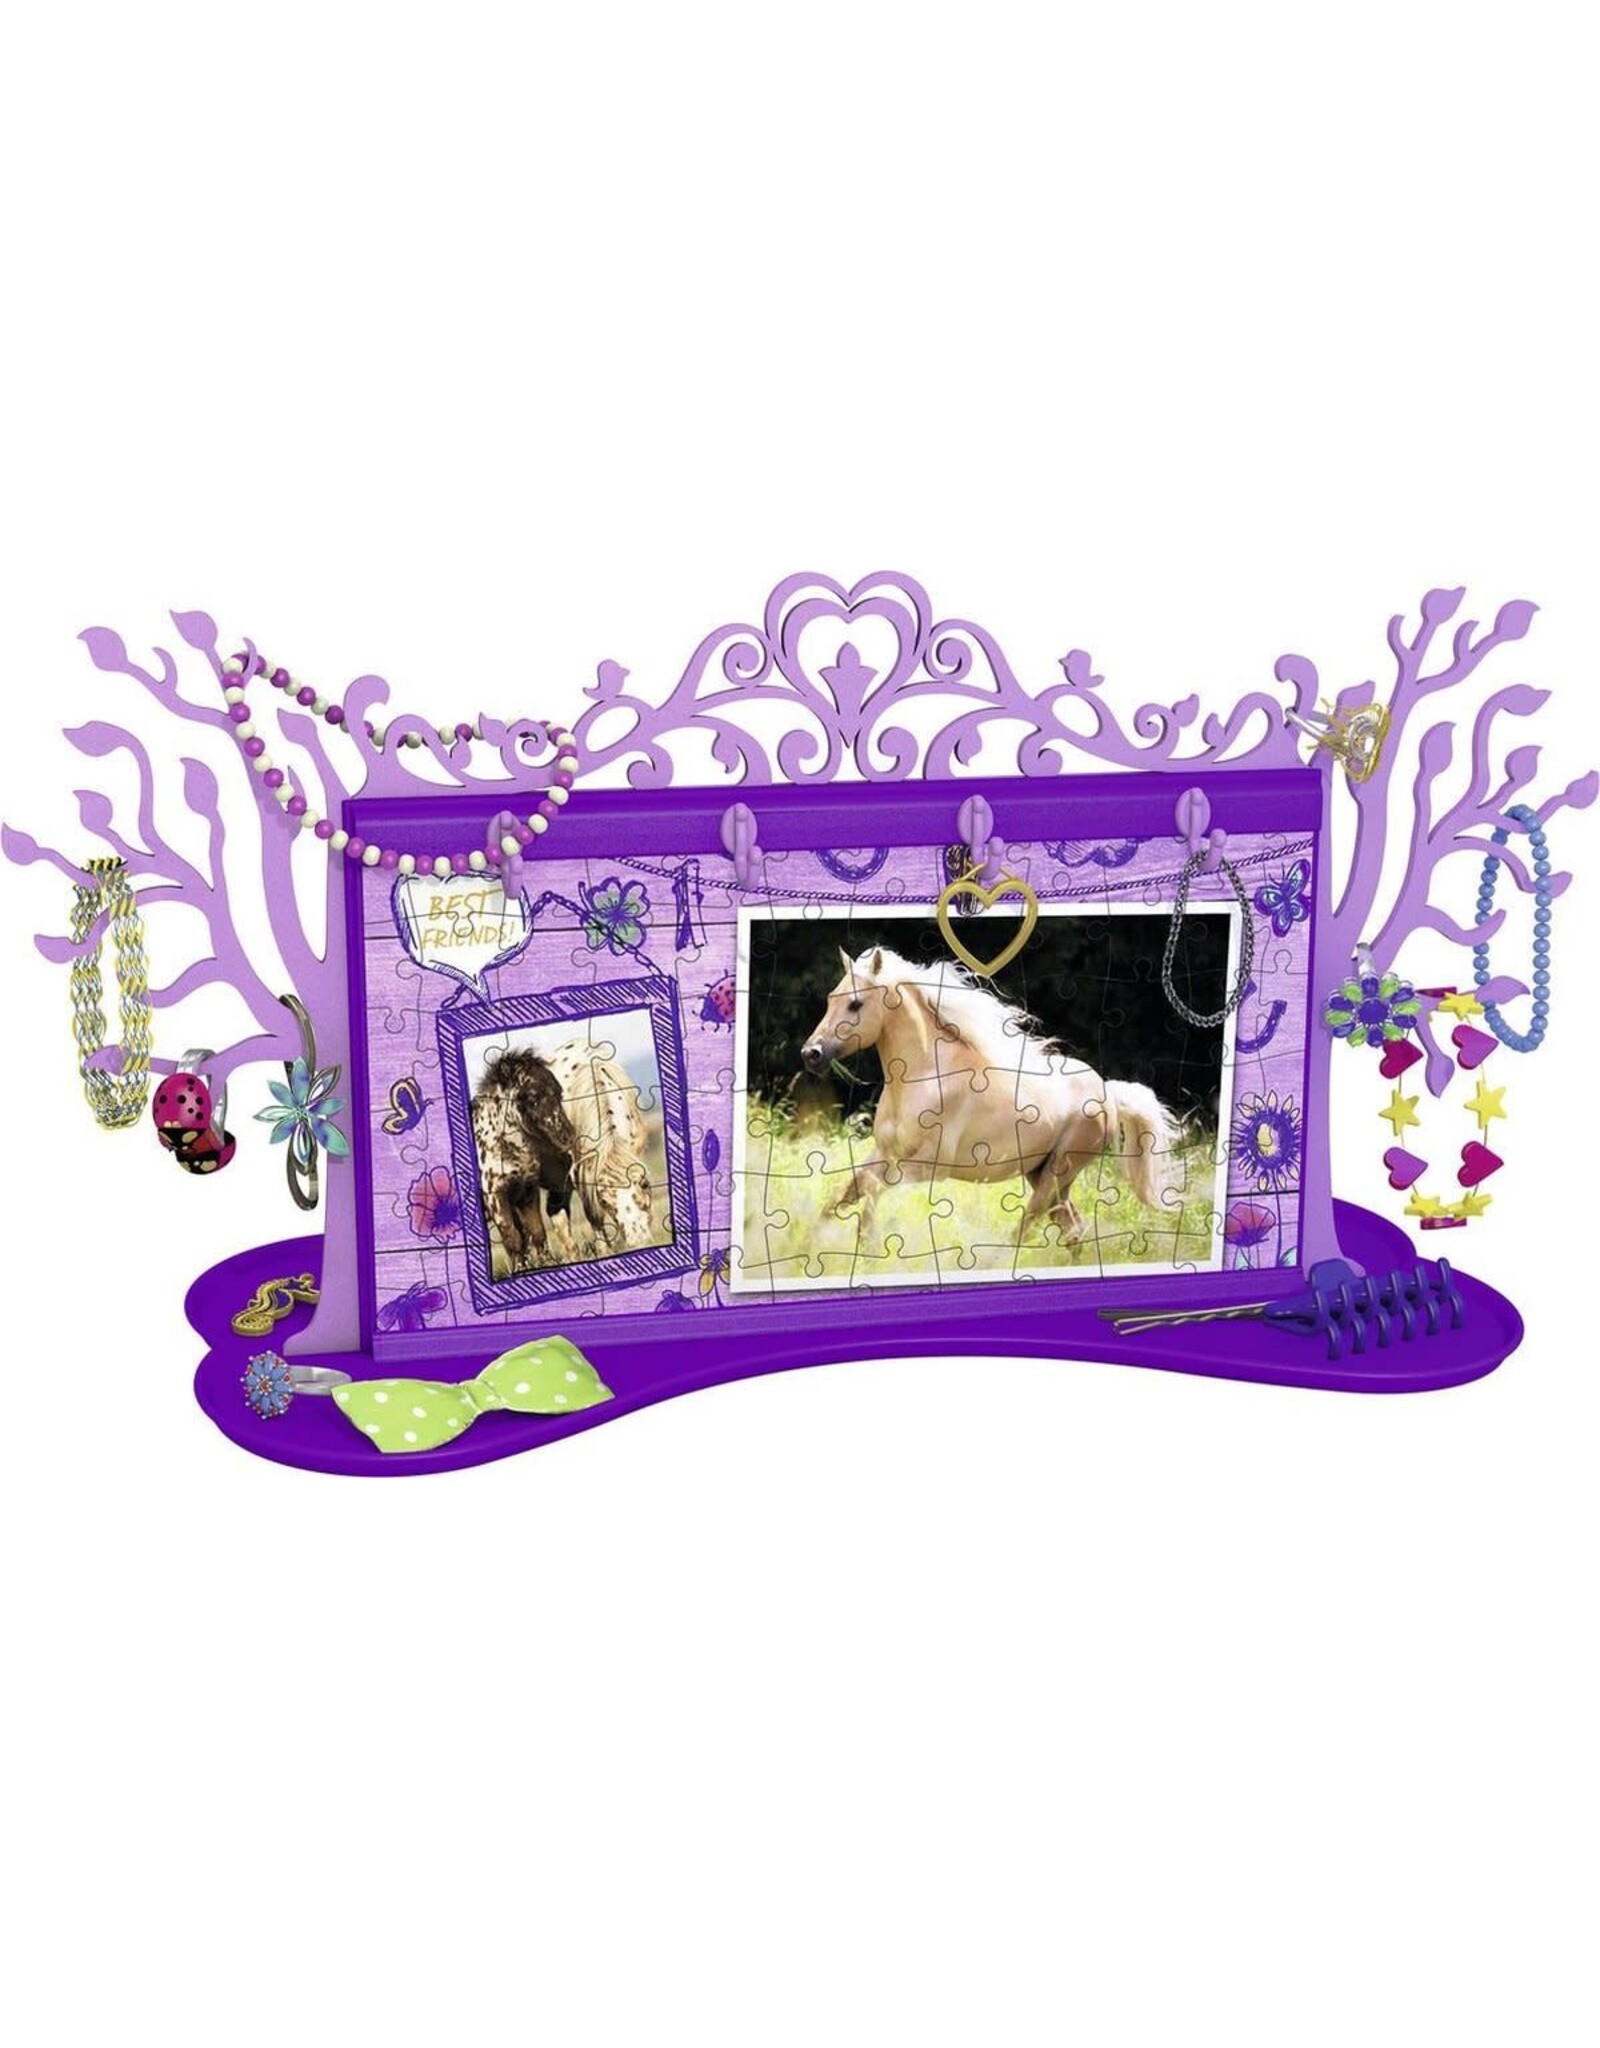 Ravensburger Ravensburger 3D Puzzel 120680 Girly Girl Edition: Juwelenboom Paarden - 108 Stukjes